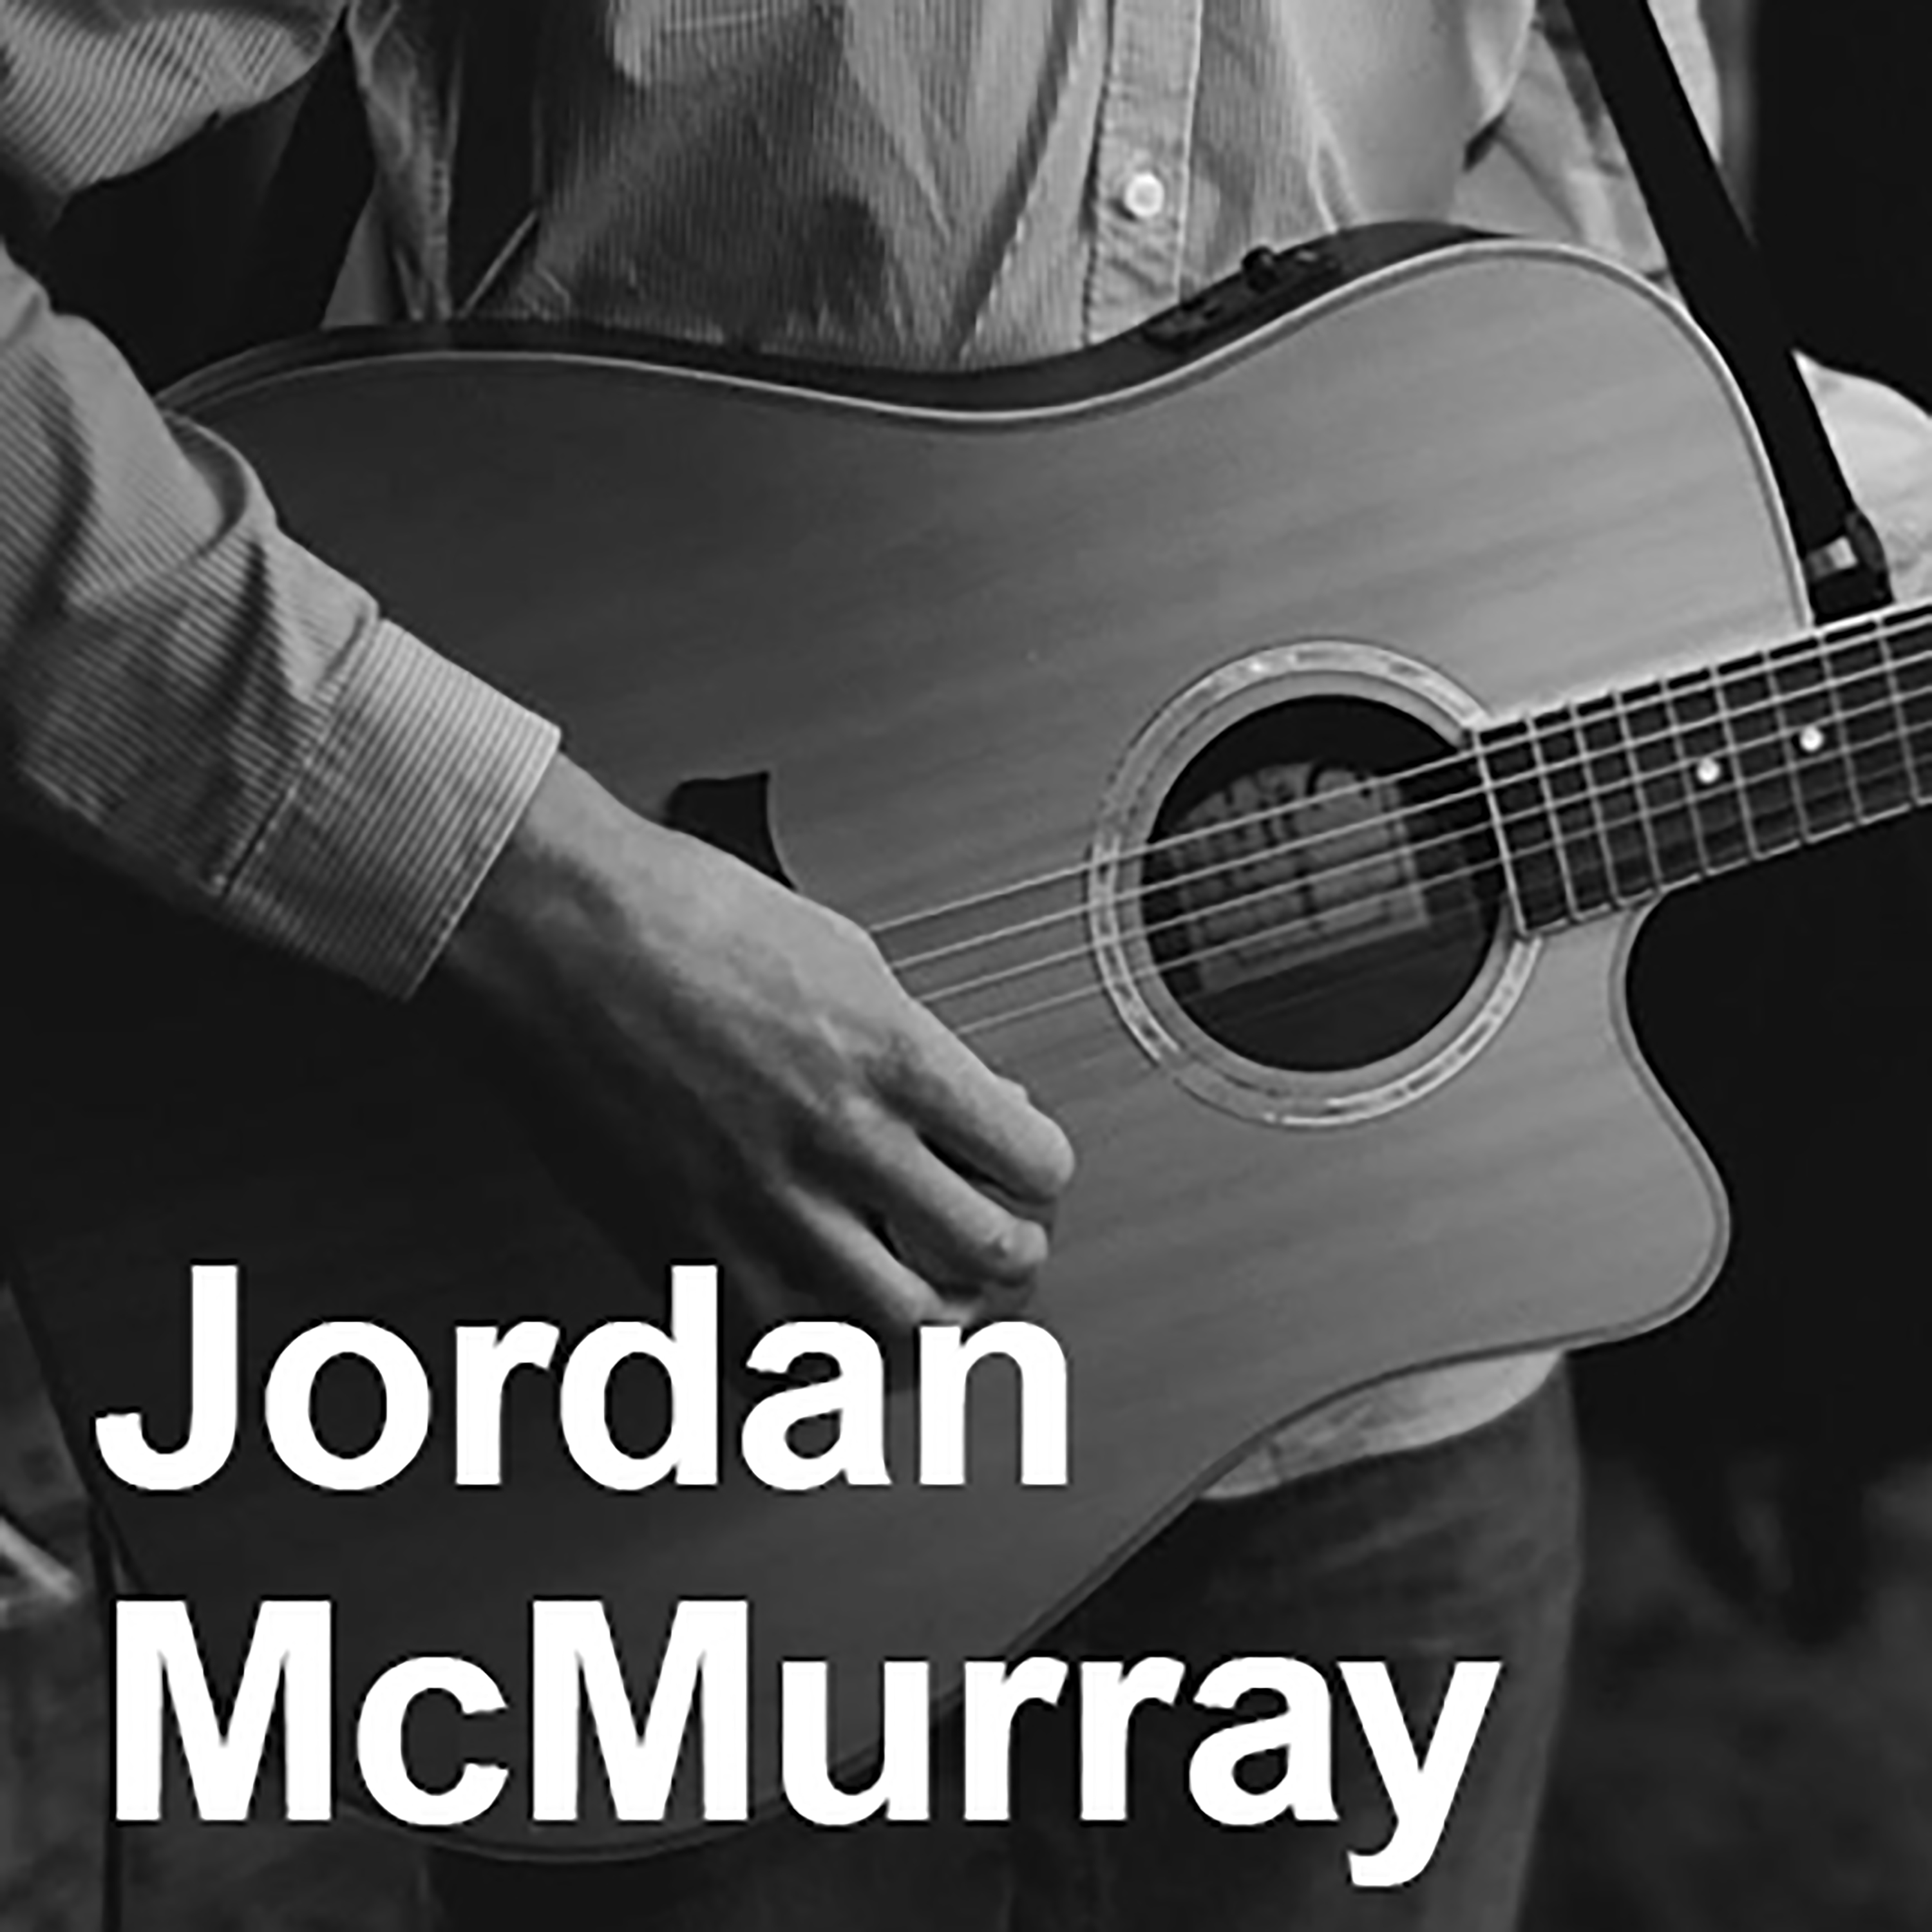 Jordan McMurray